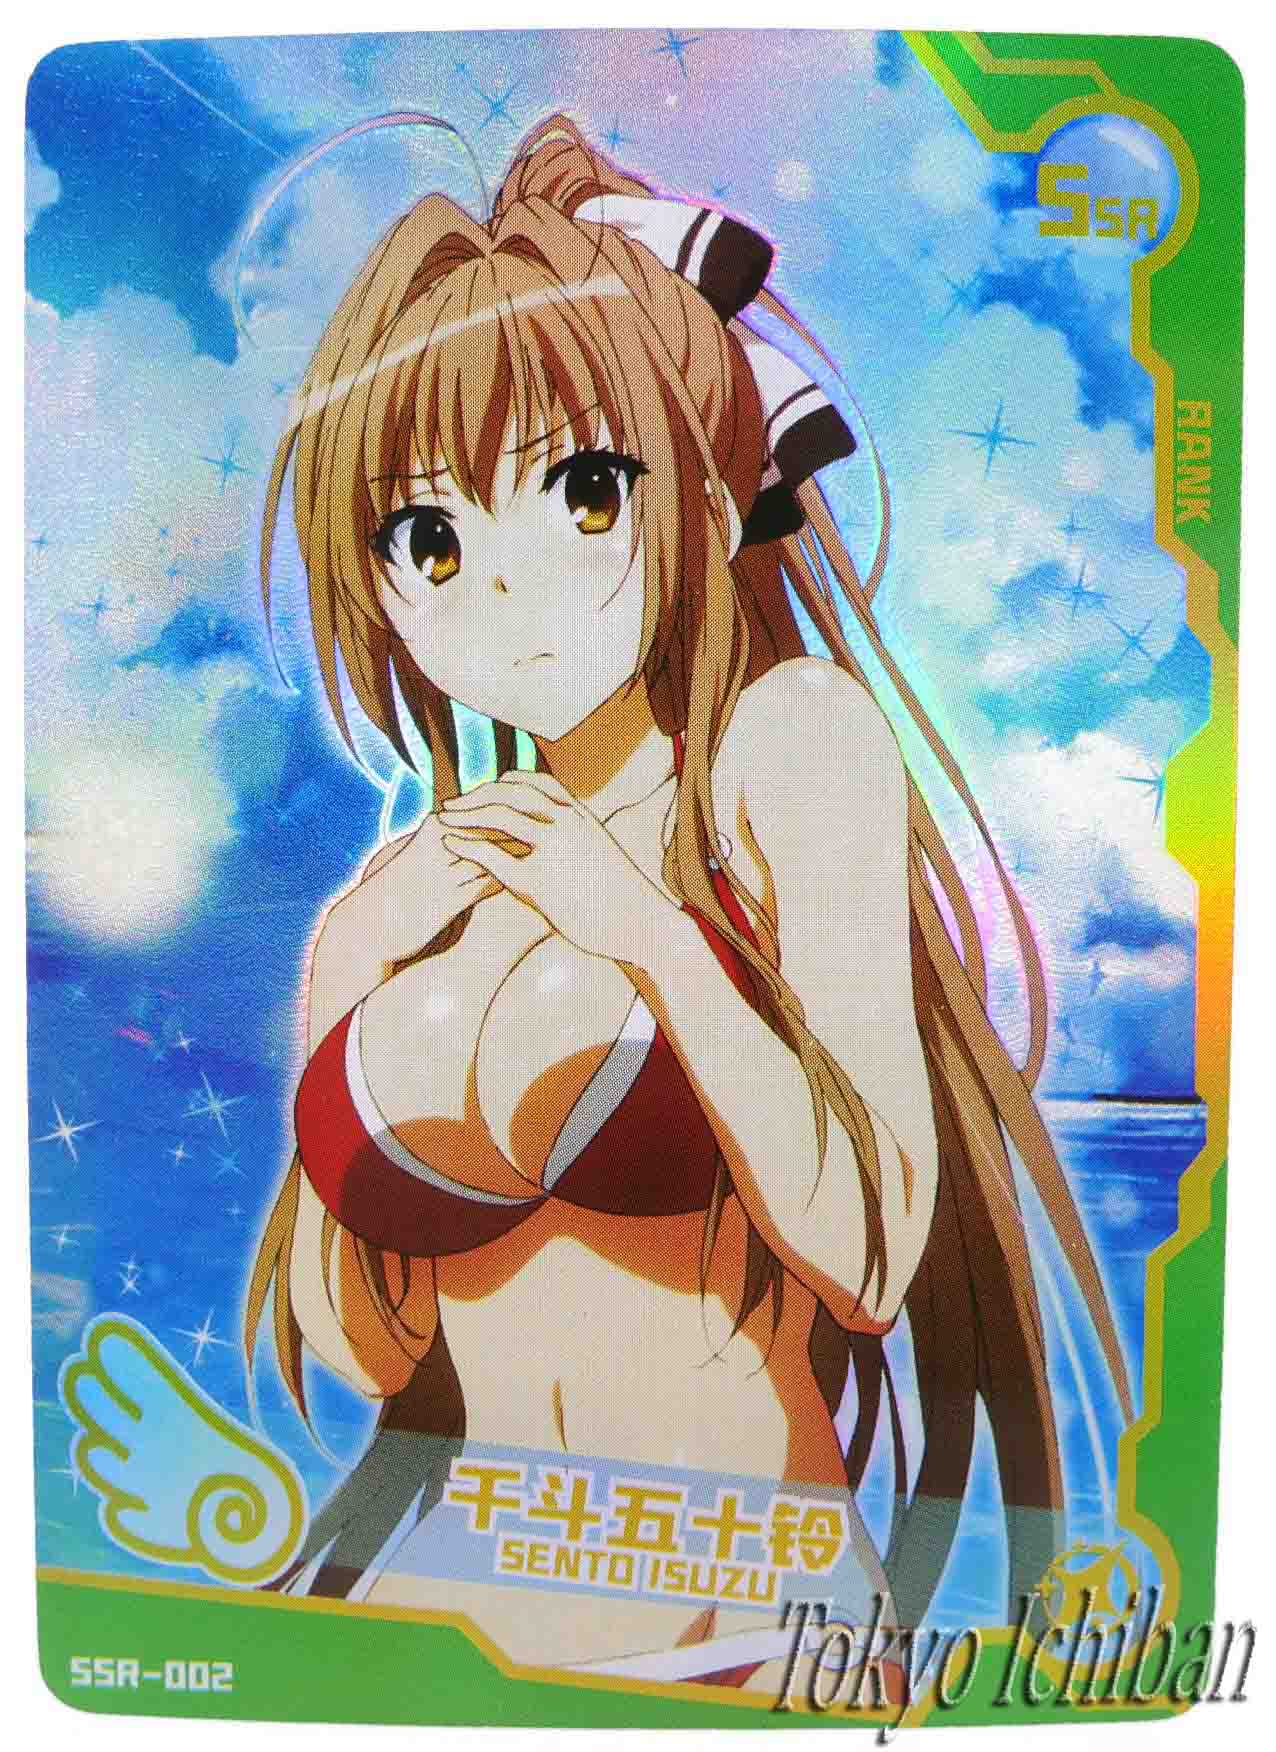 Sexy Card Amagi Brilliant Park Sento Isuzu Goddess Story SSR-002